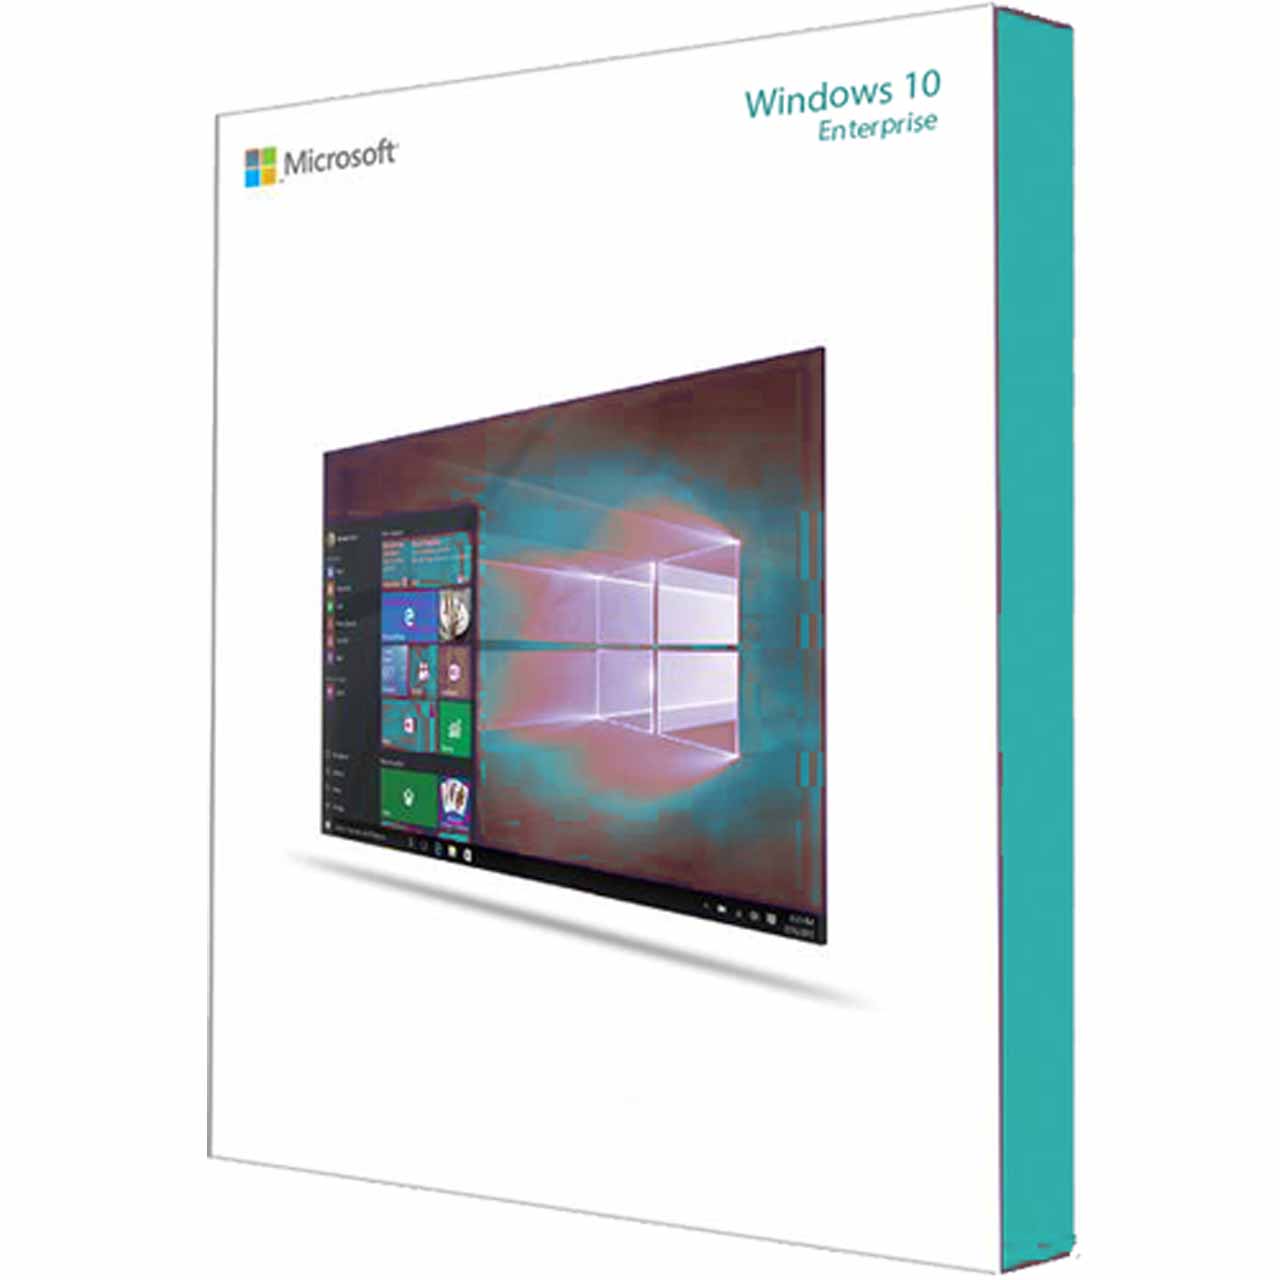 سیستم عامل Windows 10 نسخه Enterprise نشر مایکروسافت